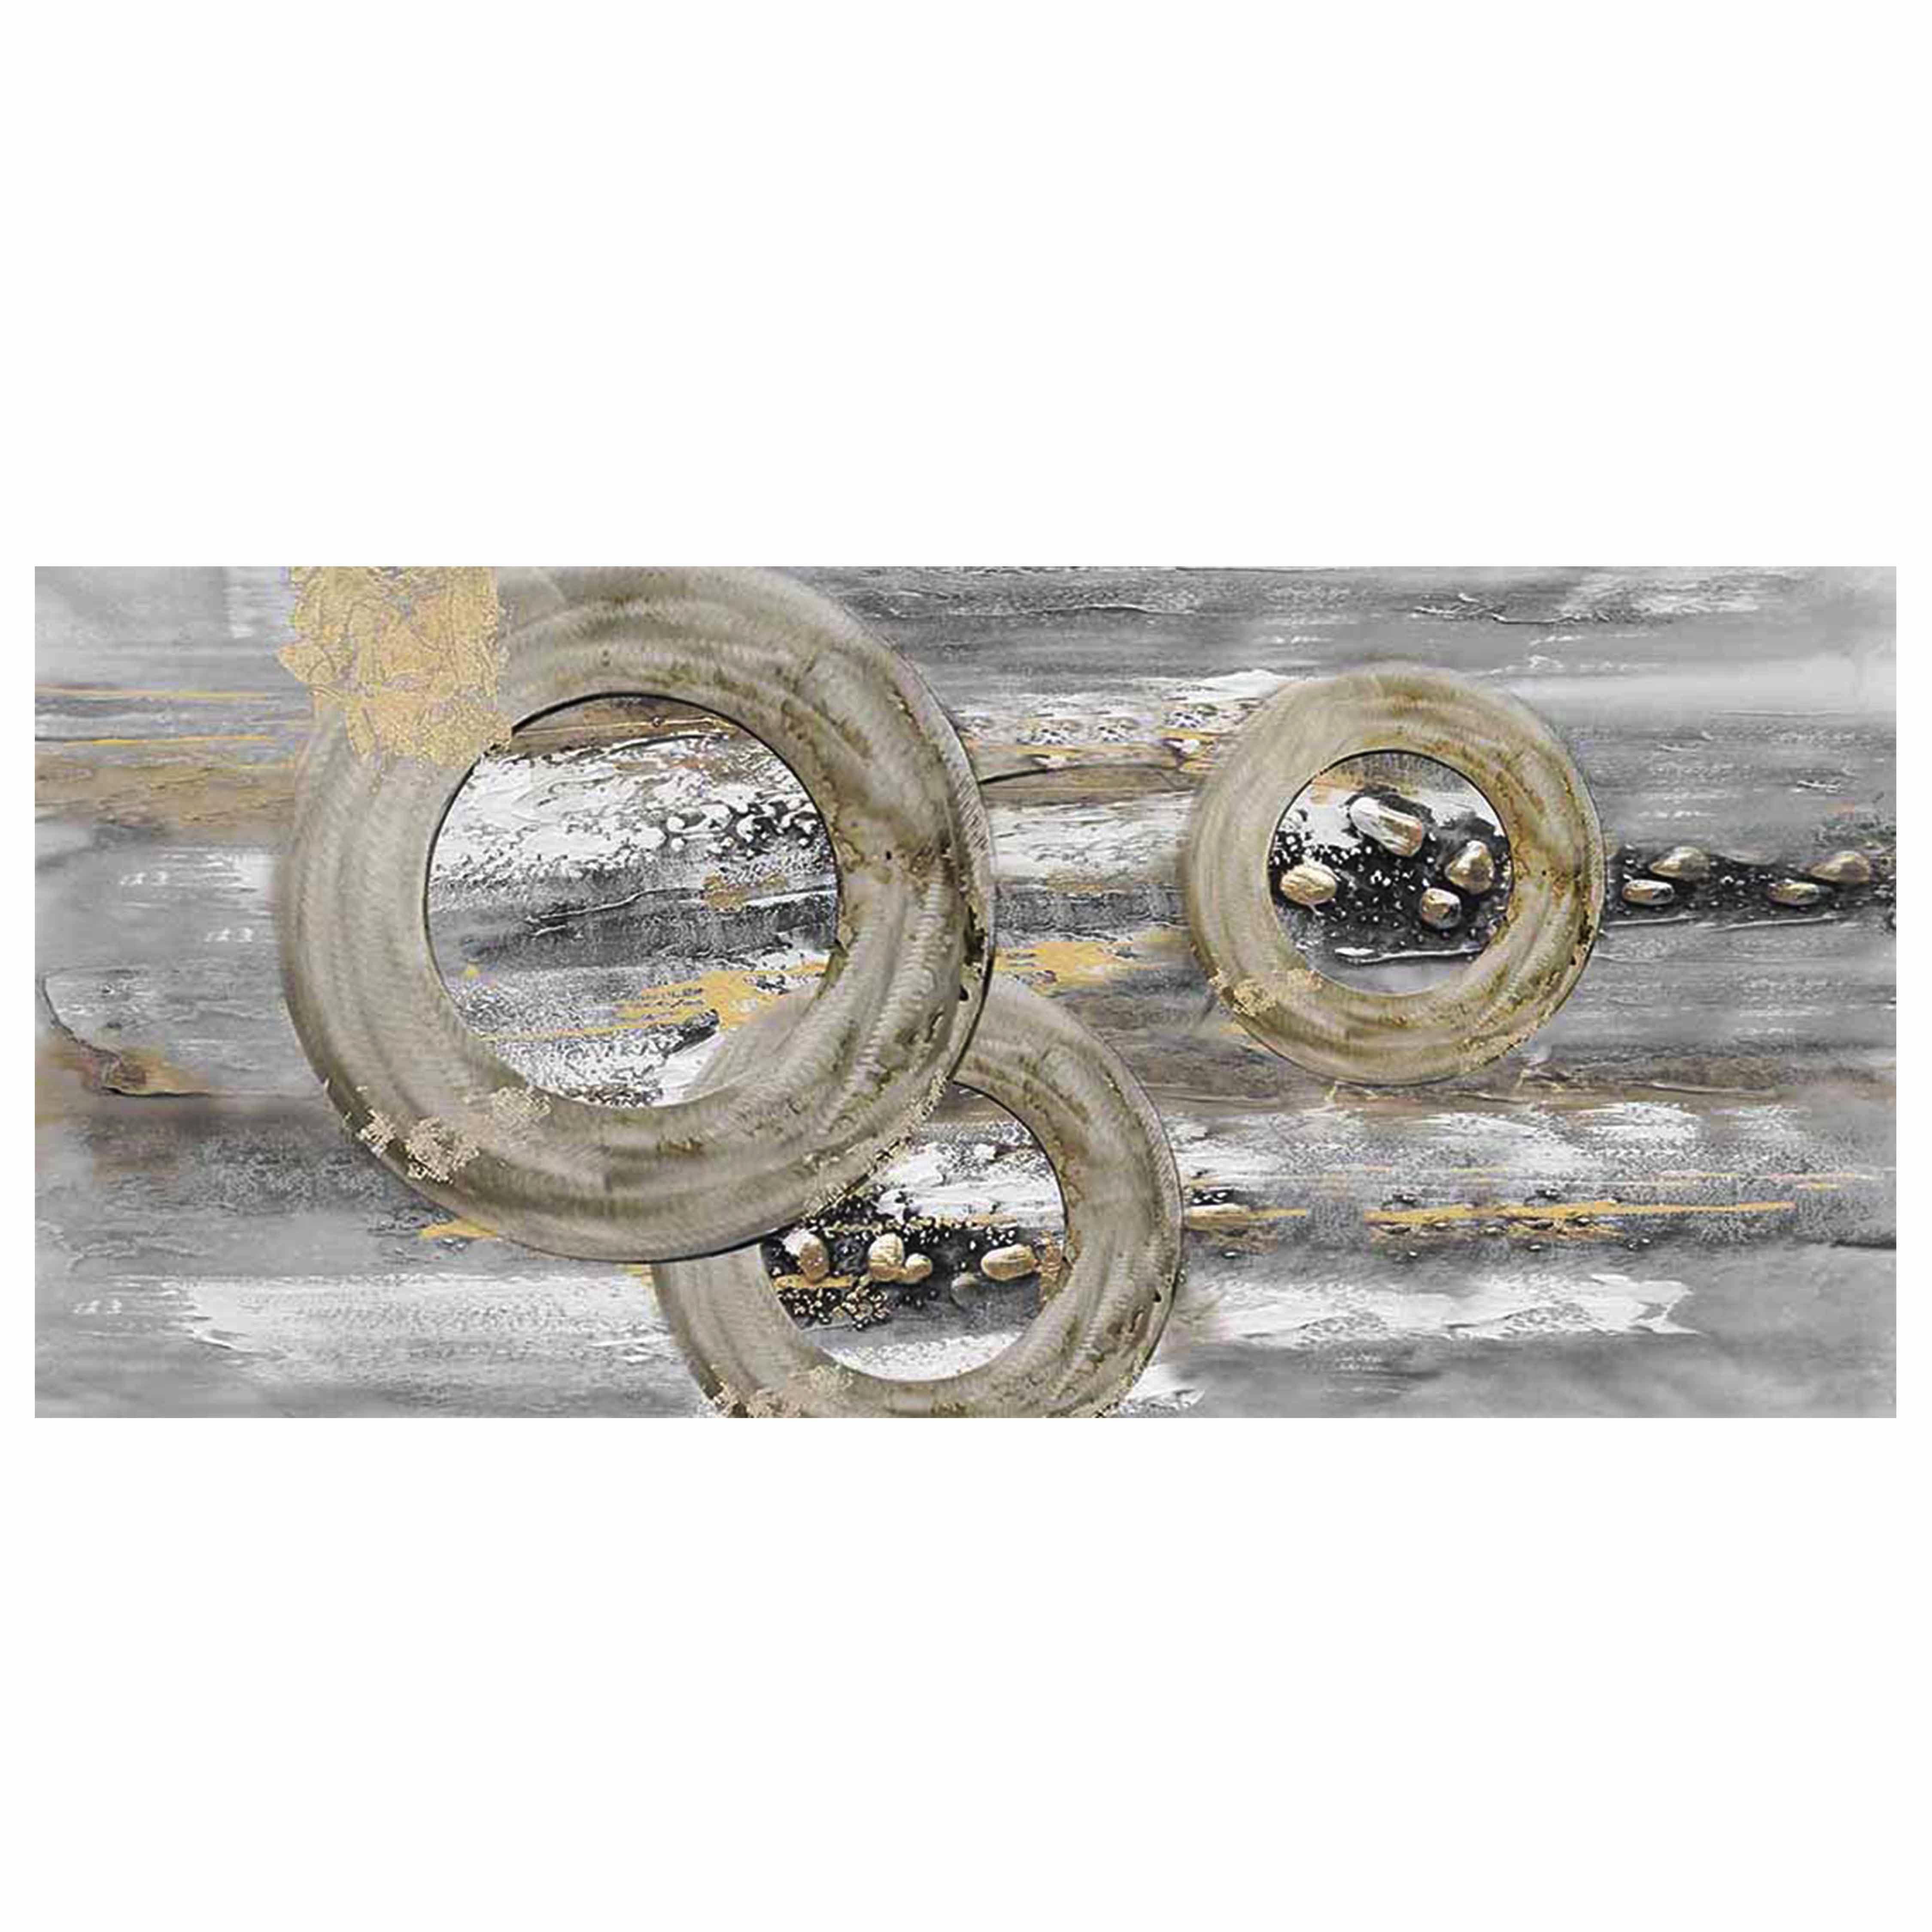 Wandbild MIRROR CIRCLES Spiegel Kreise silber aus Metall Glas Forman Wanddeko